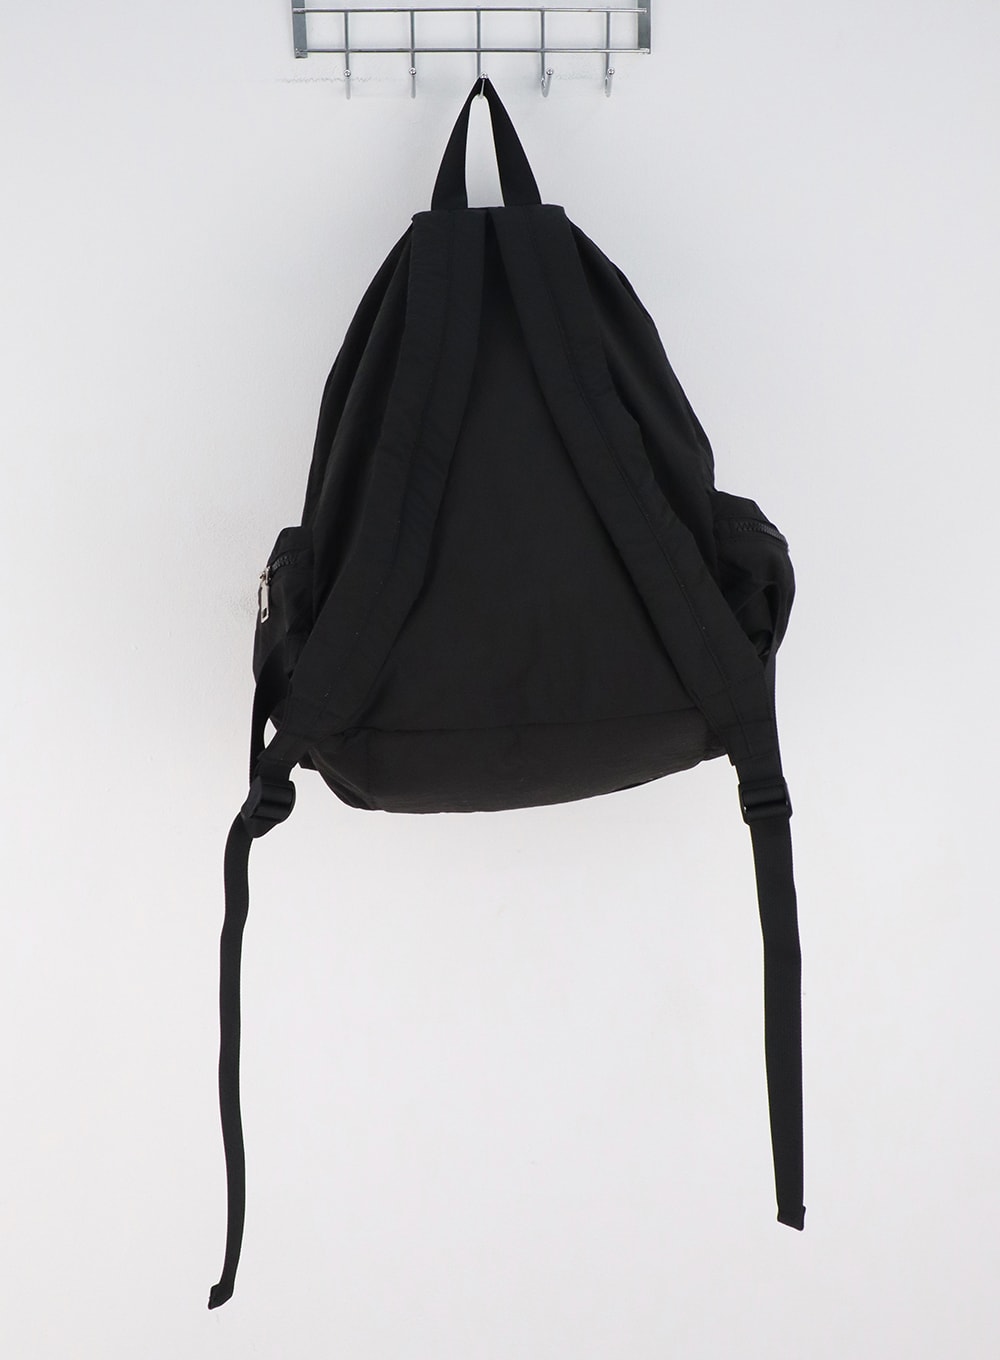 pastel-basic-backpack-ig313